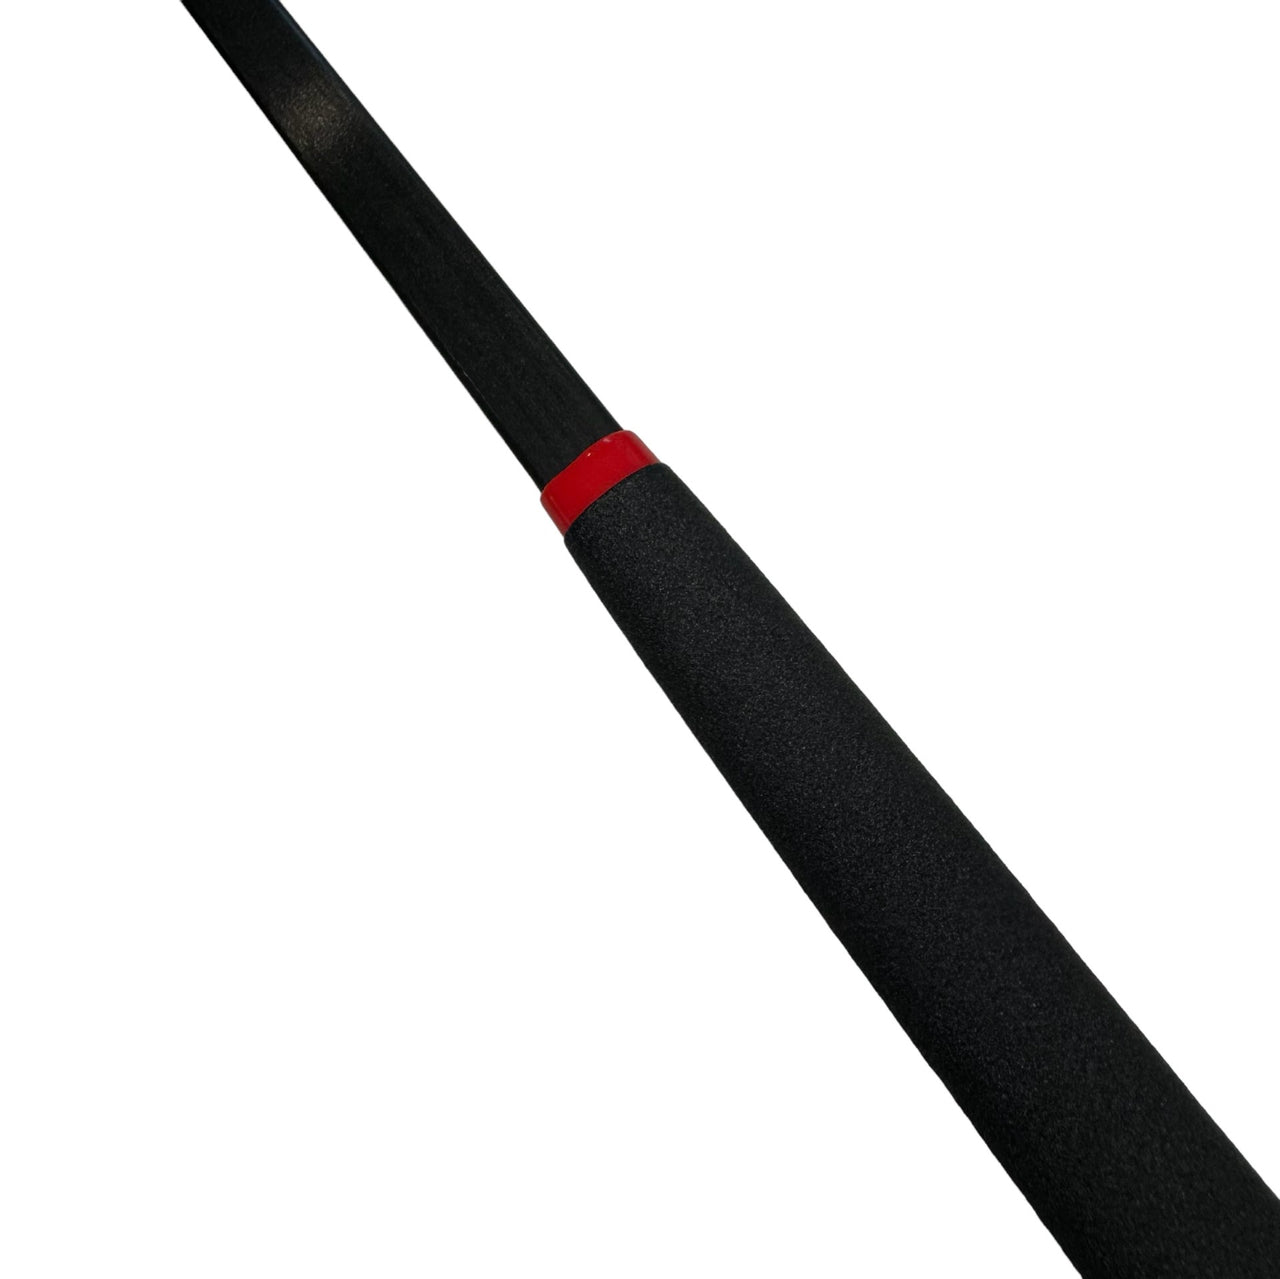 Luxury Black Carbon Fiber Plastic Flat Cane Durable Sensory Play Whip Accessory for Enhanced Precision & Control